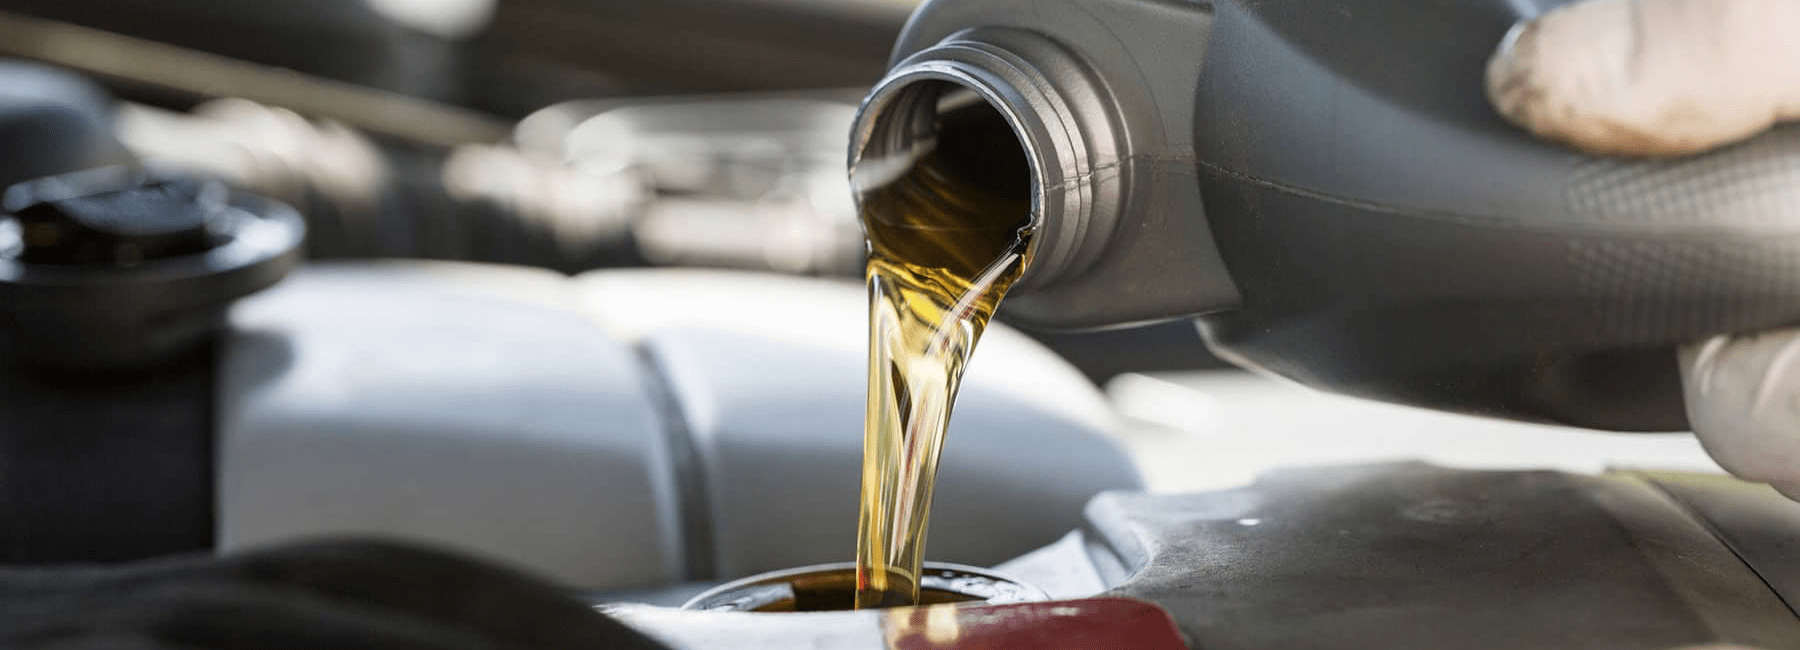 technician pours oil in car engine